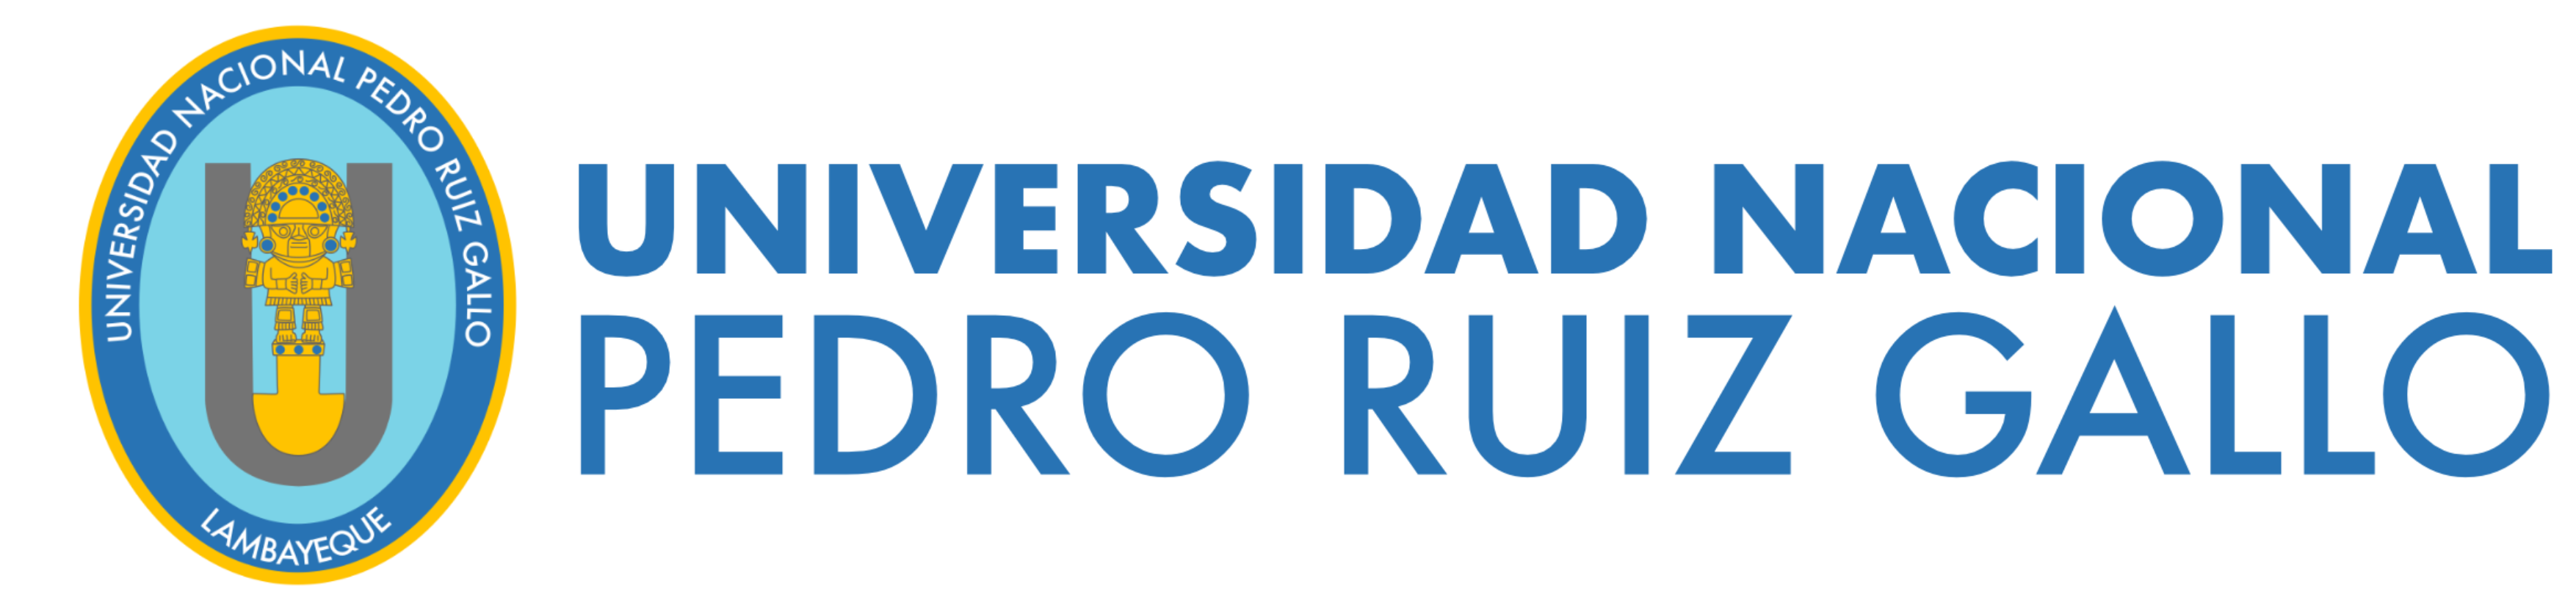 Pedro Ruiz Gallo National University logo